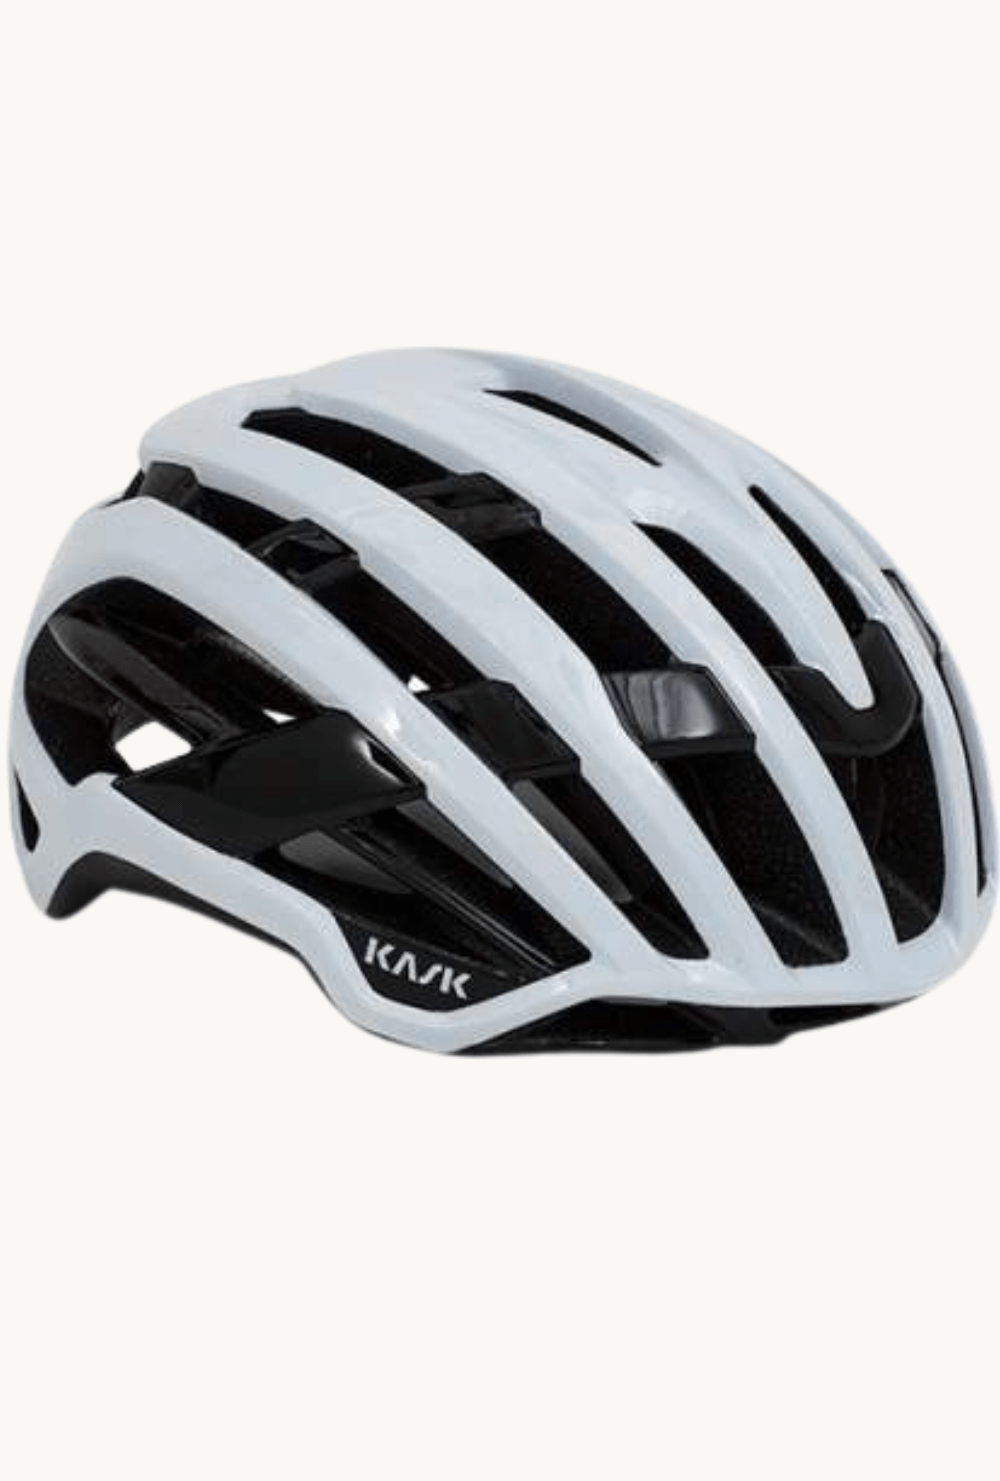 Helmet - Kask Valegro Whitemedium / White